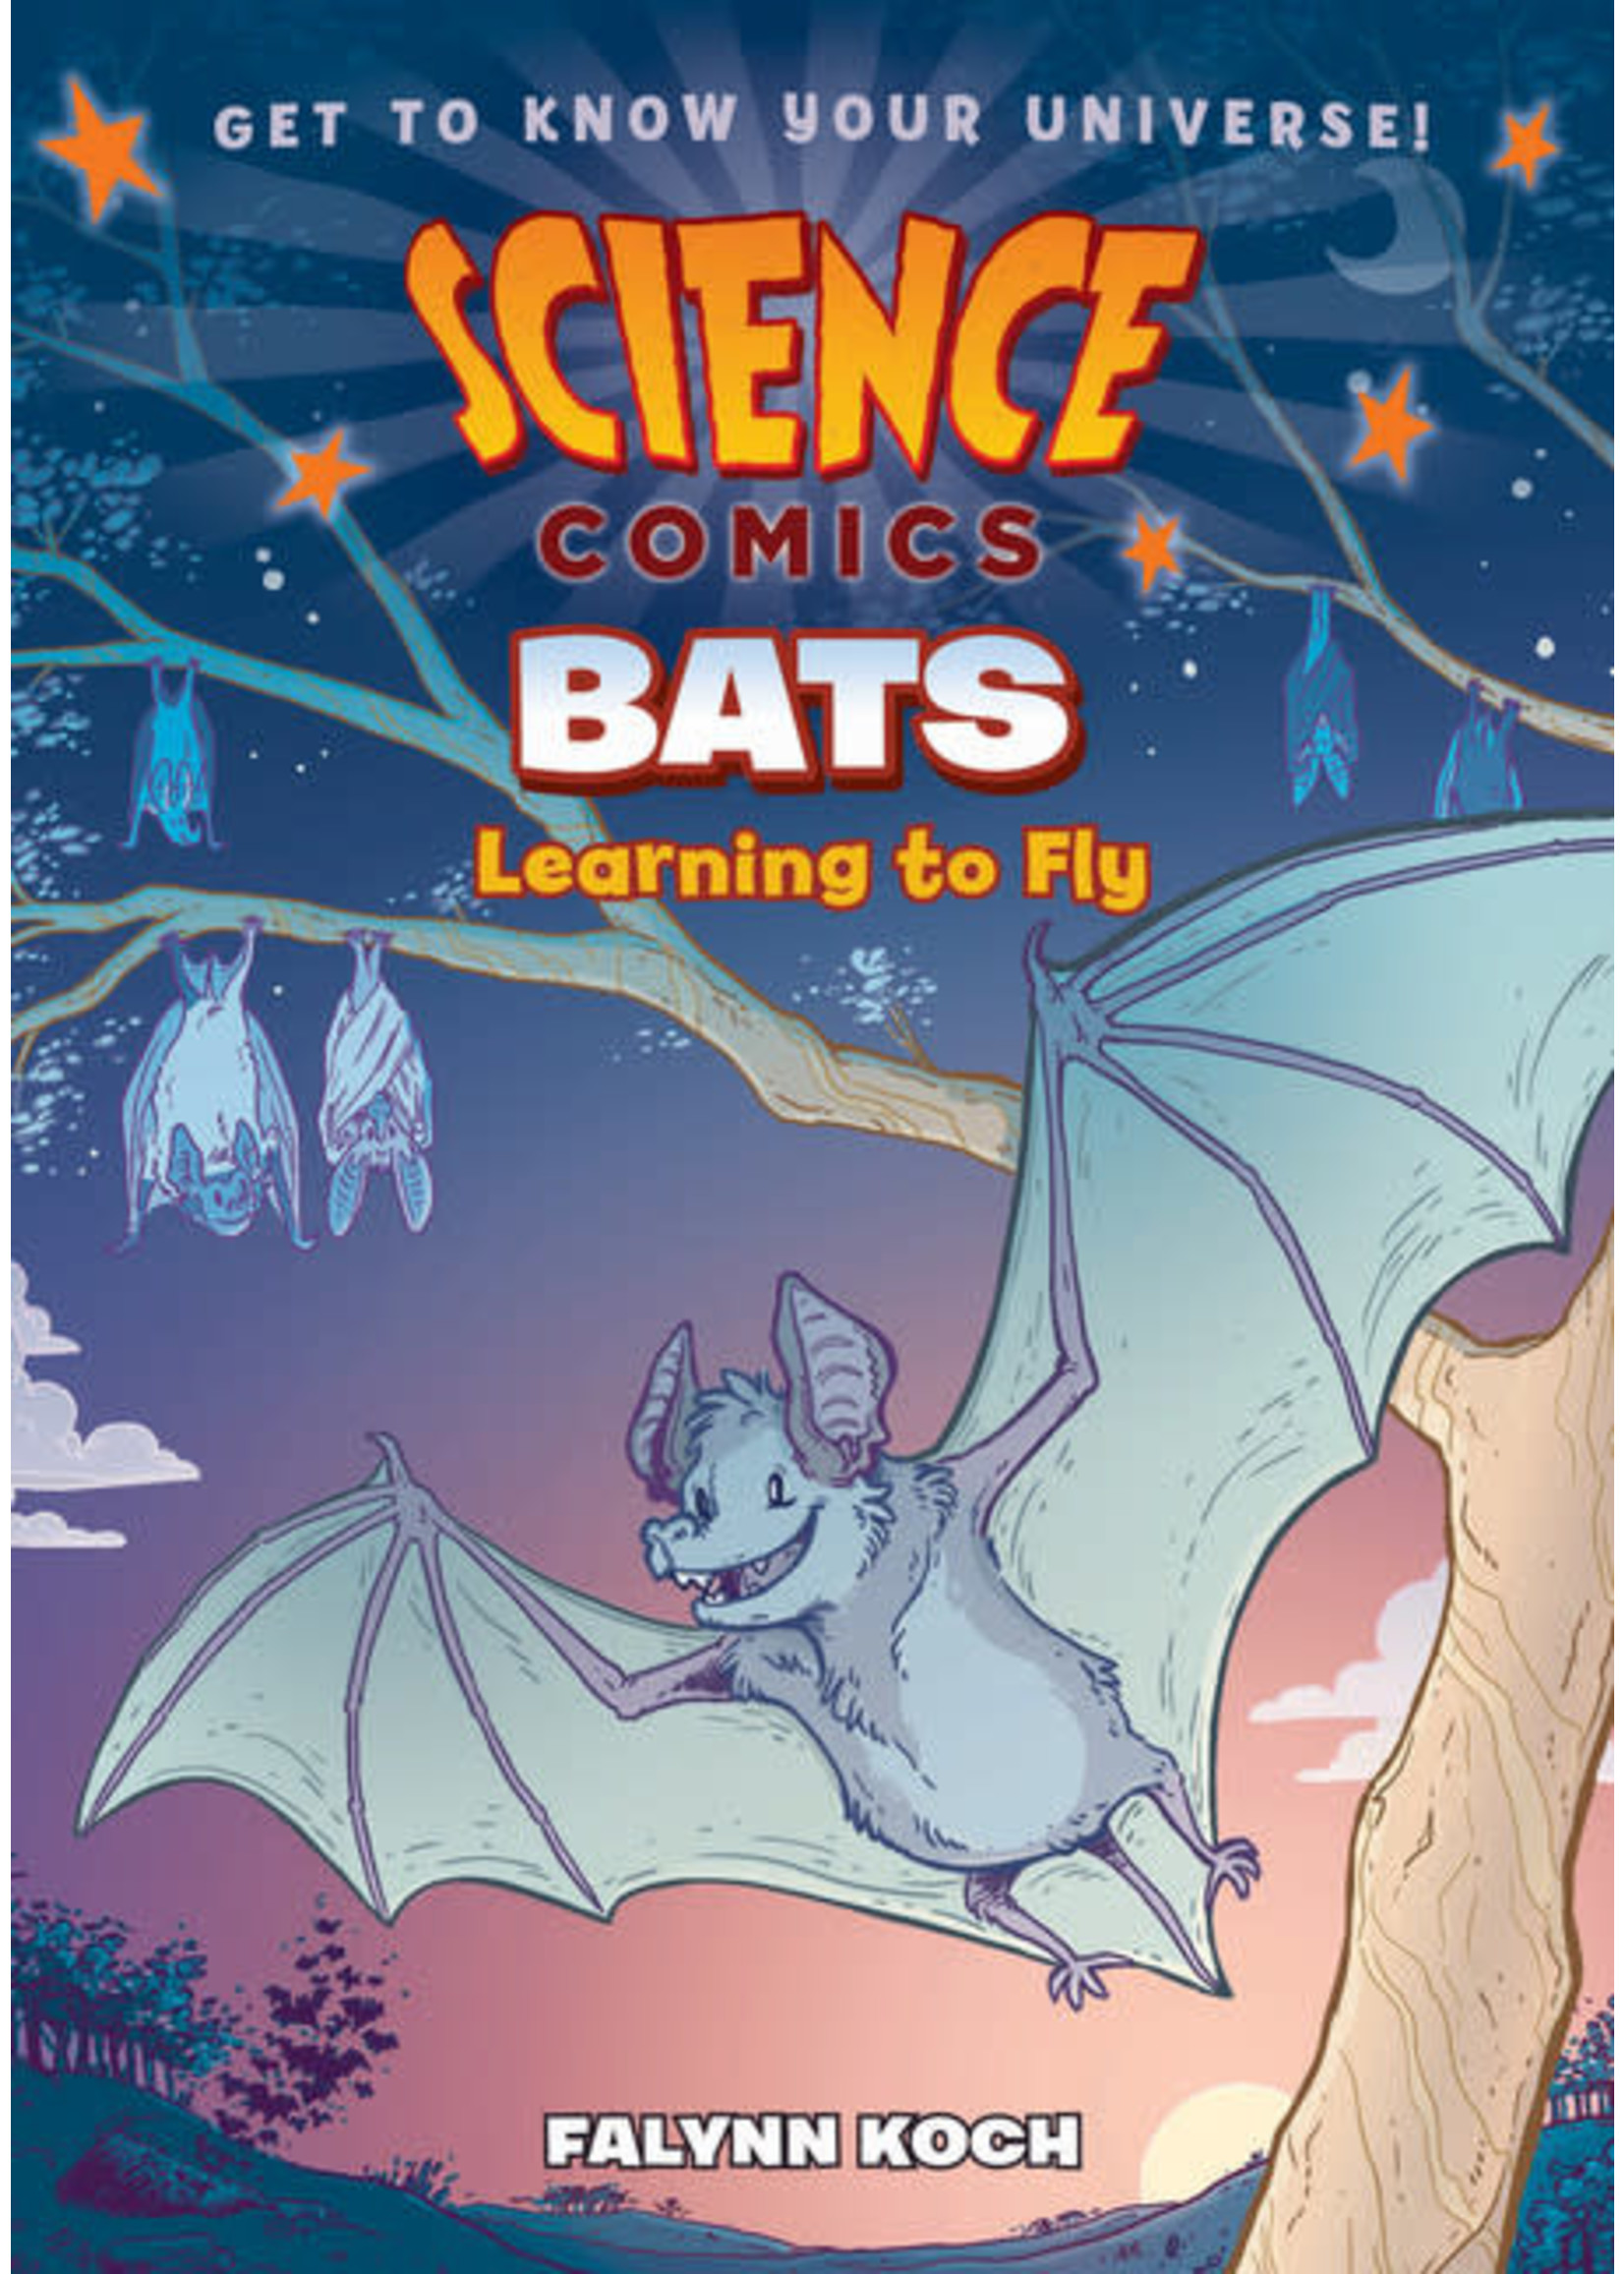 Science Comics: Bats - Learning to Fly by Falynn Koch